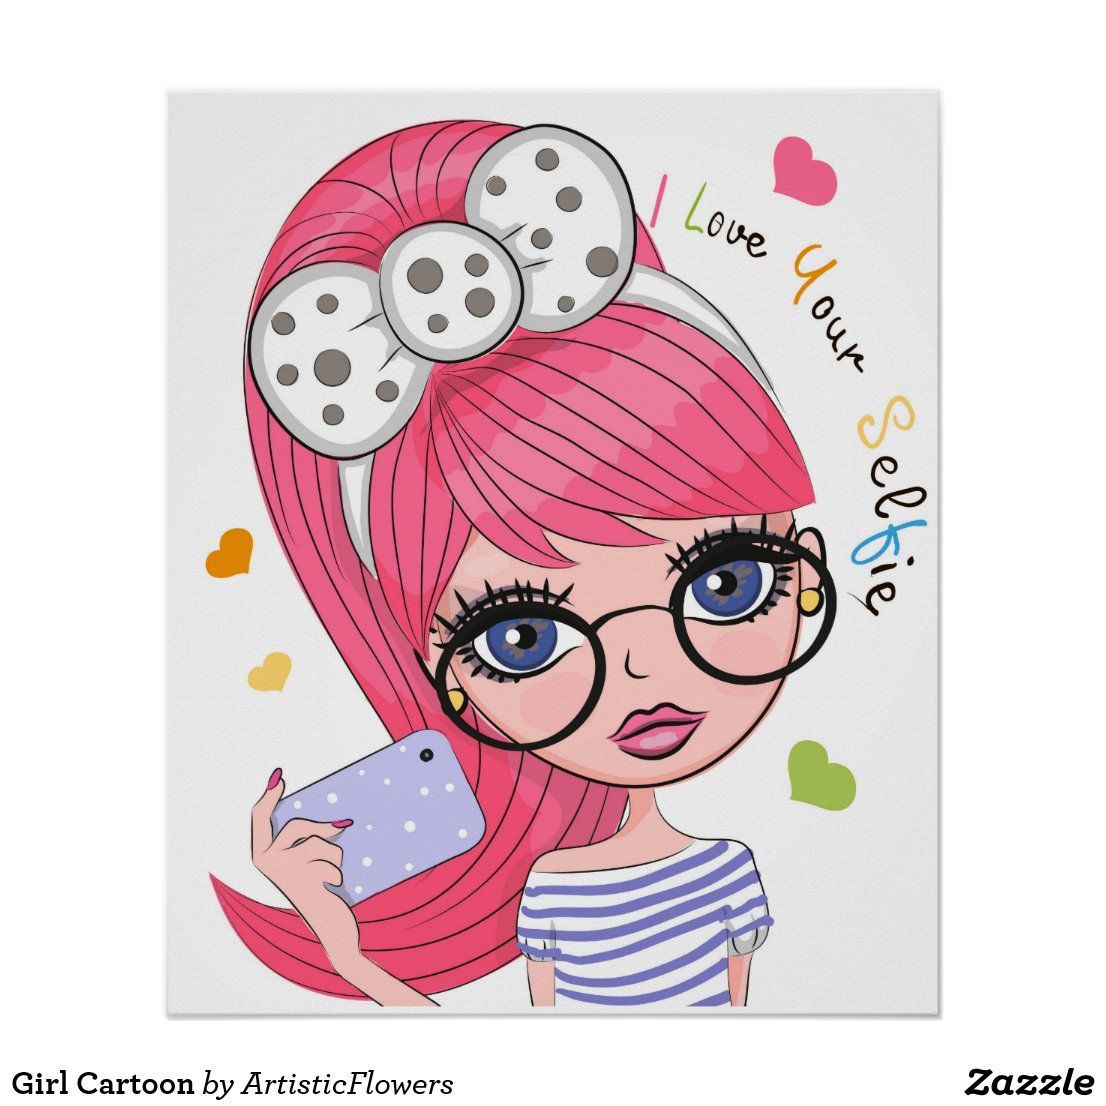 Girl Cartoon Poster | Zazzle.com - Girl Cartoon Poster | Zazzle.com -   22 beauty Face cartoon ideas